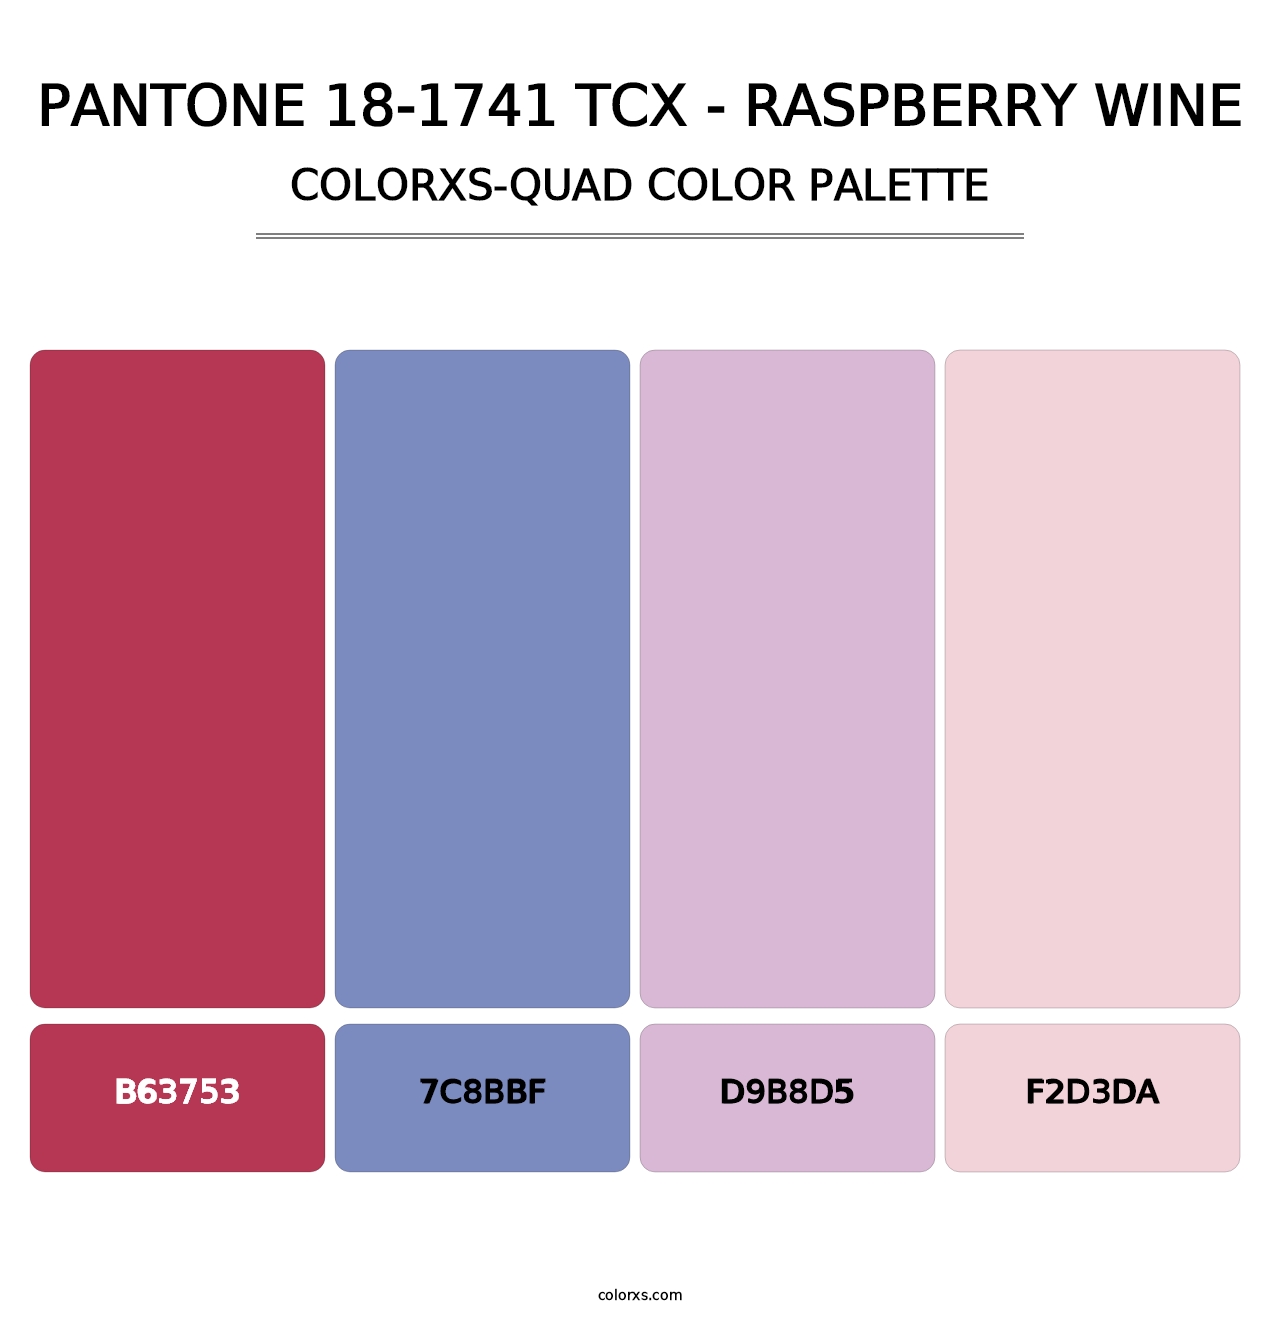 PANTONE 18-1741 TCX - Raspberry Wine - Colorxs Quad Palette